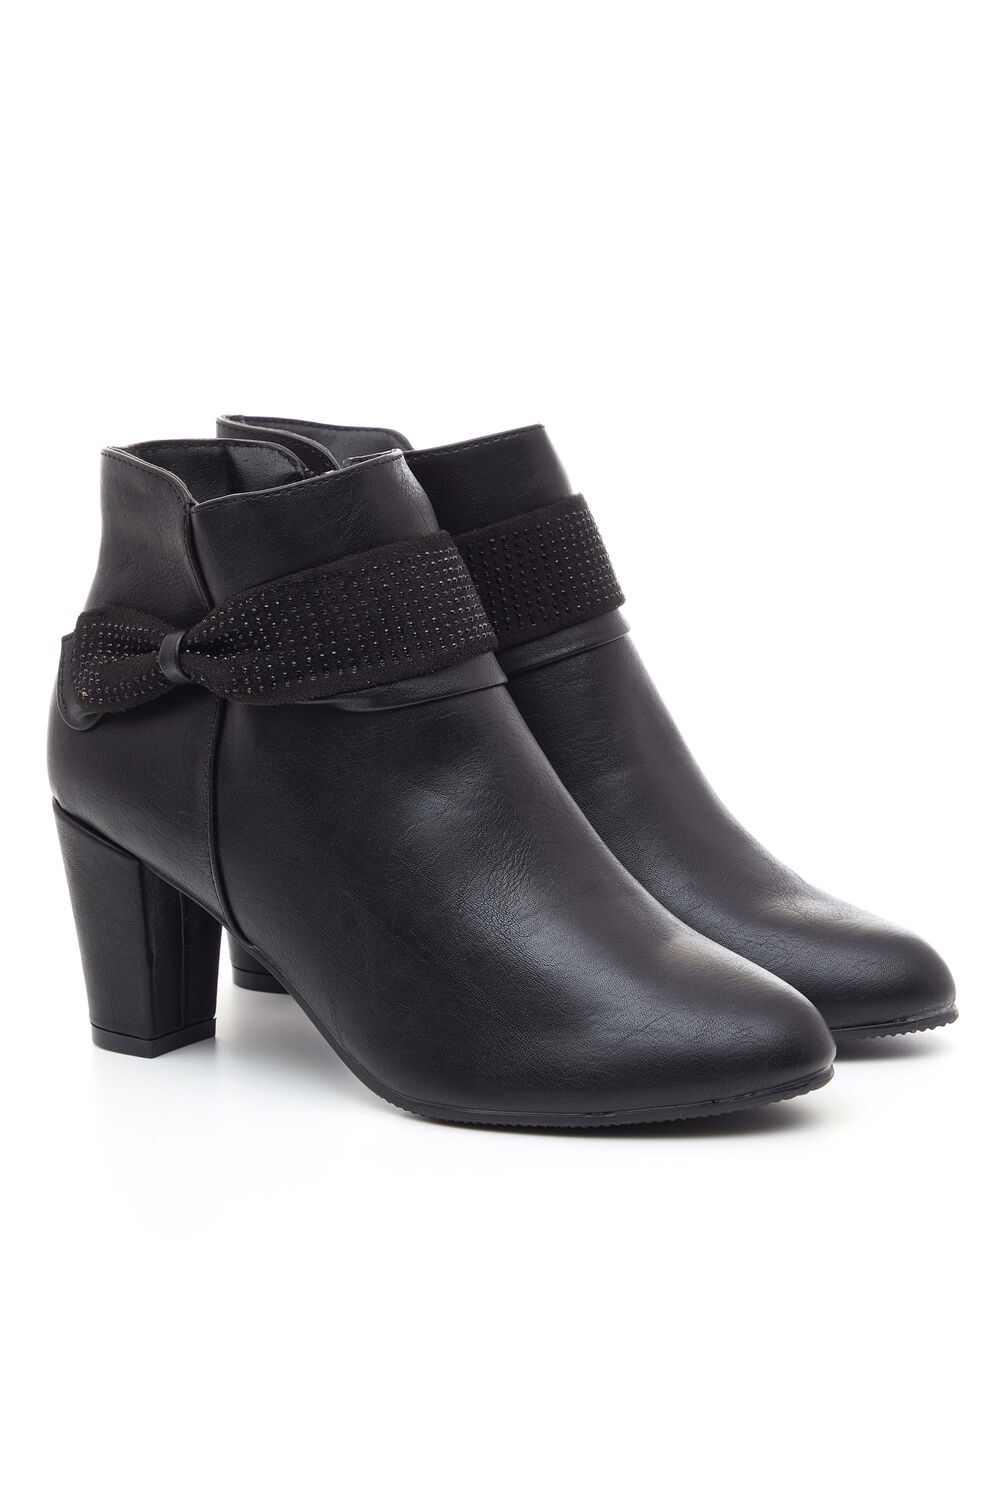 Cushion Walk Black - Heeled Boots With Diamante Bow Trim, Size: 3